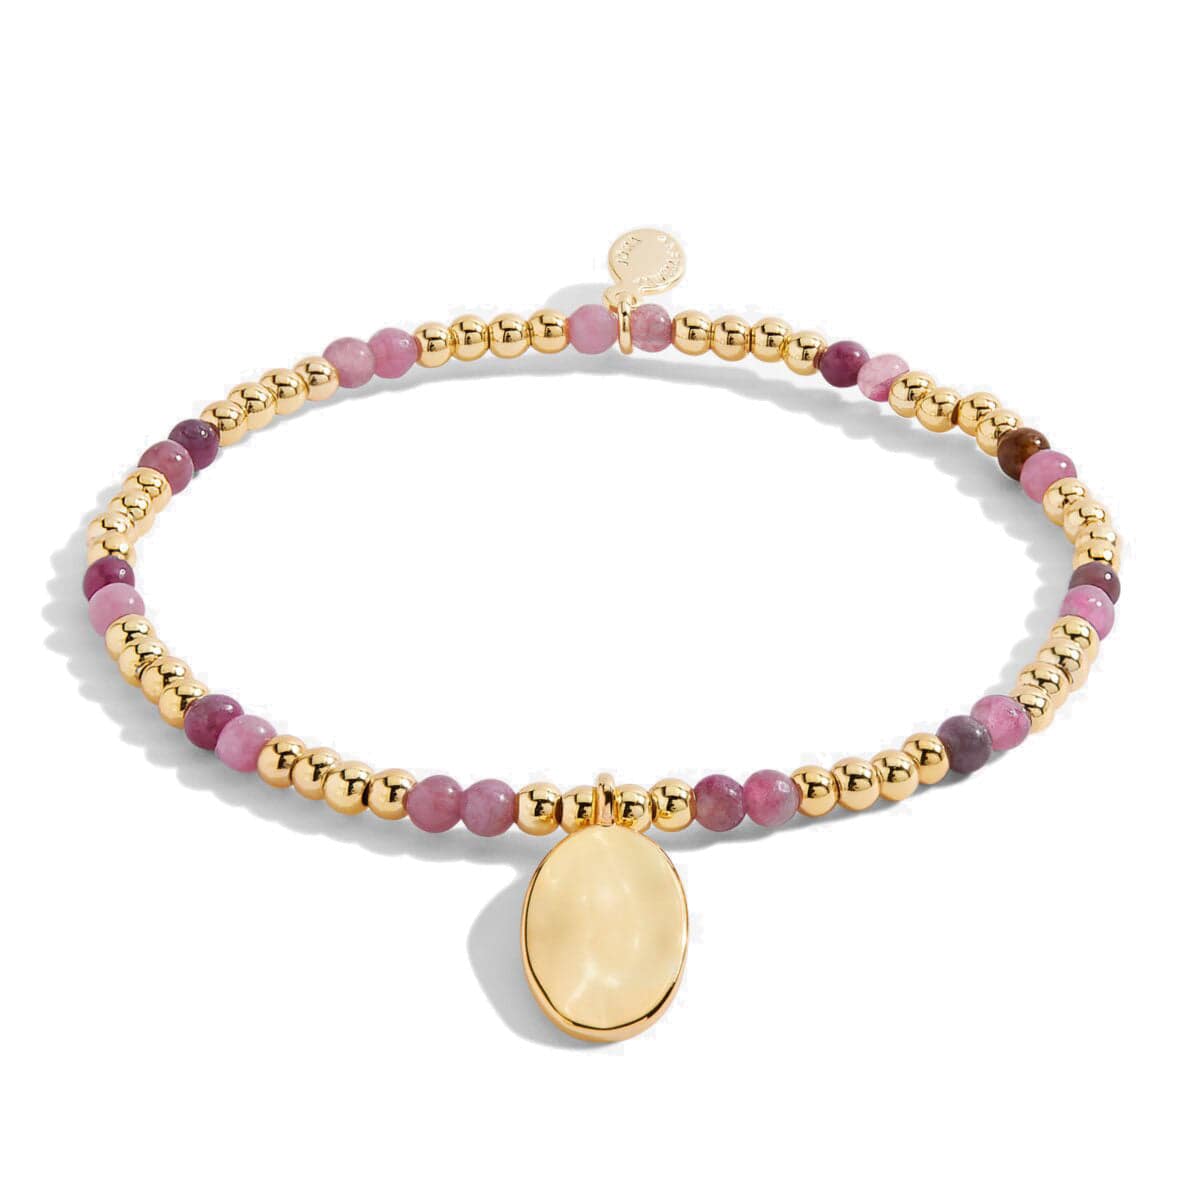 Joma Jewellery Bracelet Joma Jewellery Bracelet - A Little Gold Birthstone - October - Tourmaline